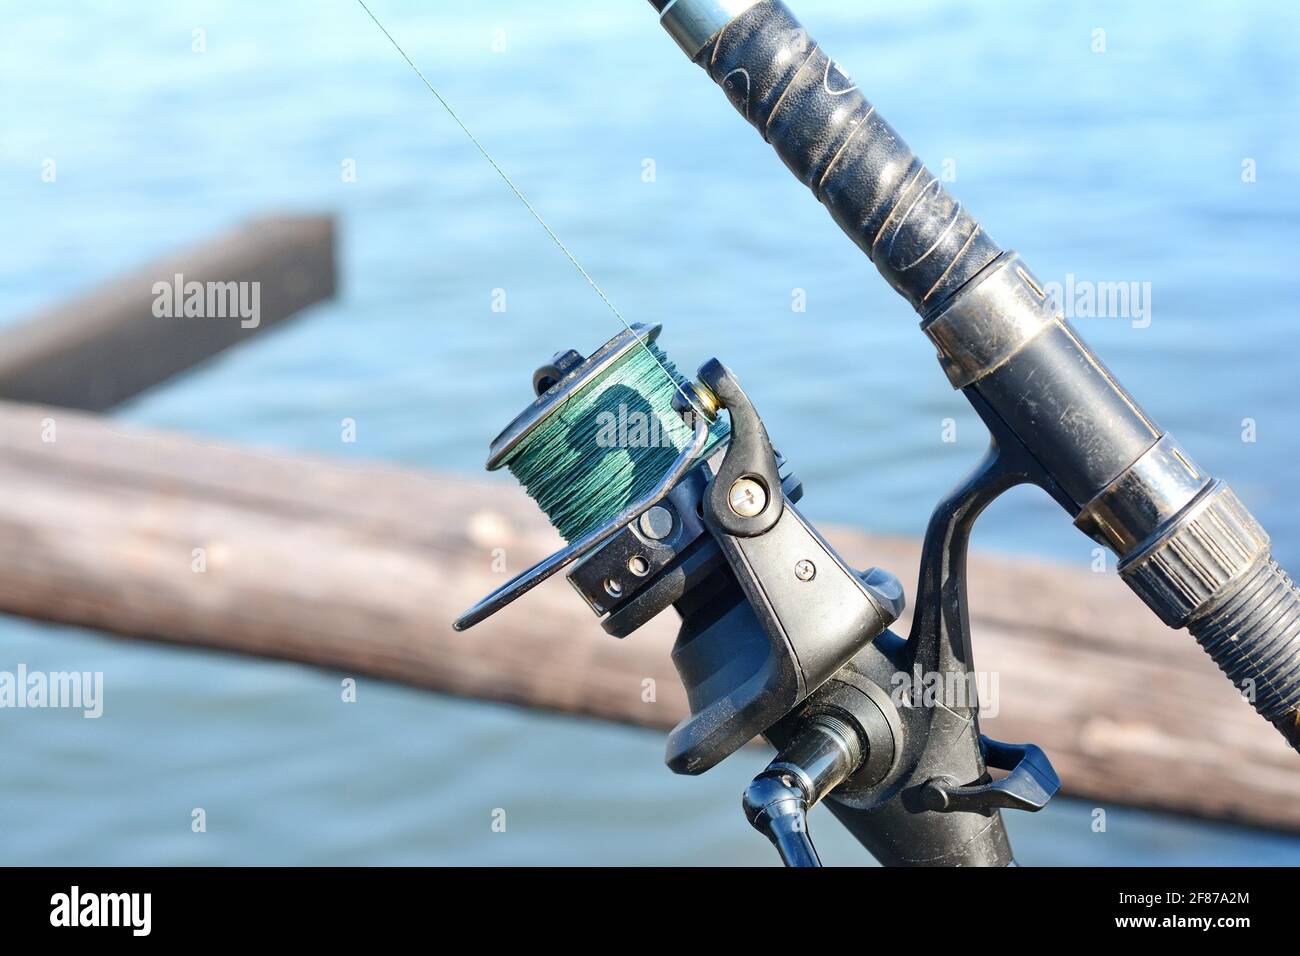 https://c8.alamy.com/comp/2F87A2M/ishing-reel-on-the-rod-fishing-on-the-feeder-carp-fishing-rods-with-carp-bite-indicators-and-reels-set-up-on-rod-pod-near-lake-river-2F87A2M.jpg